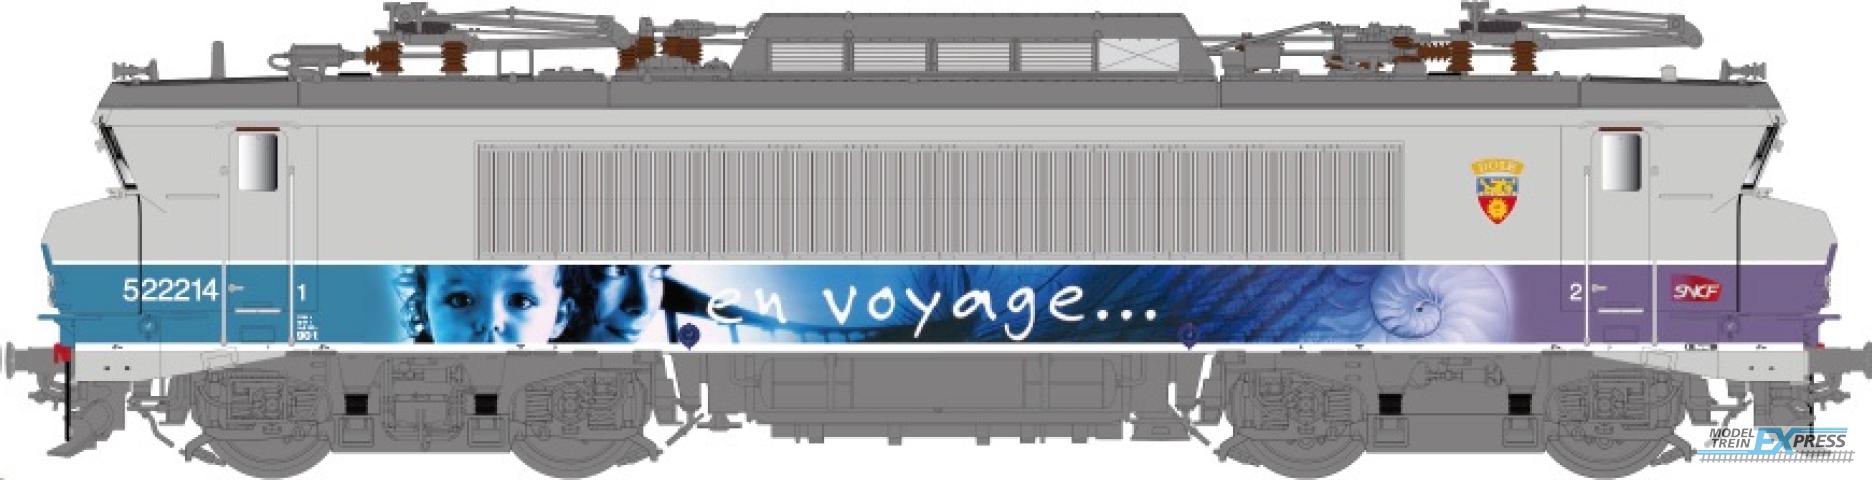 LS Models 10555S BB 22200, grijs/paars, En Voyage, carmillon logo, front nummer, kleine cabine, blazoen Dole  /  Ep. V-VI  /  SNCF  /  HO  /  AC SOUND  /  1 P.